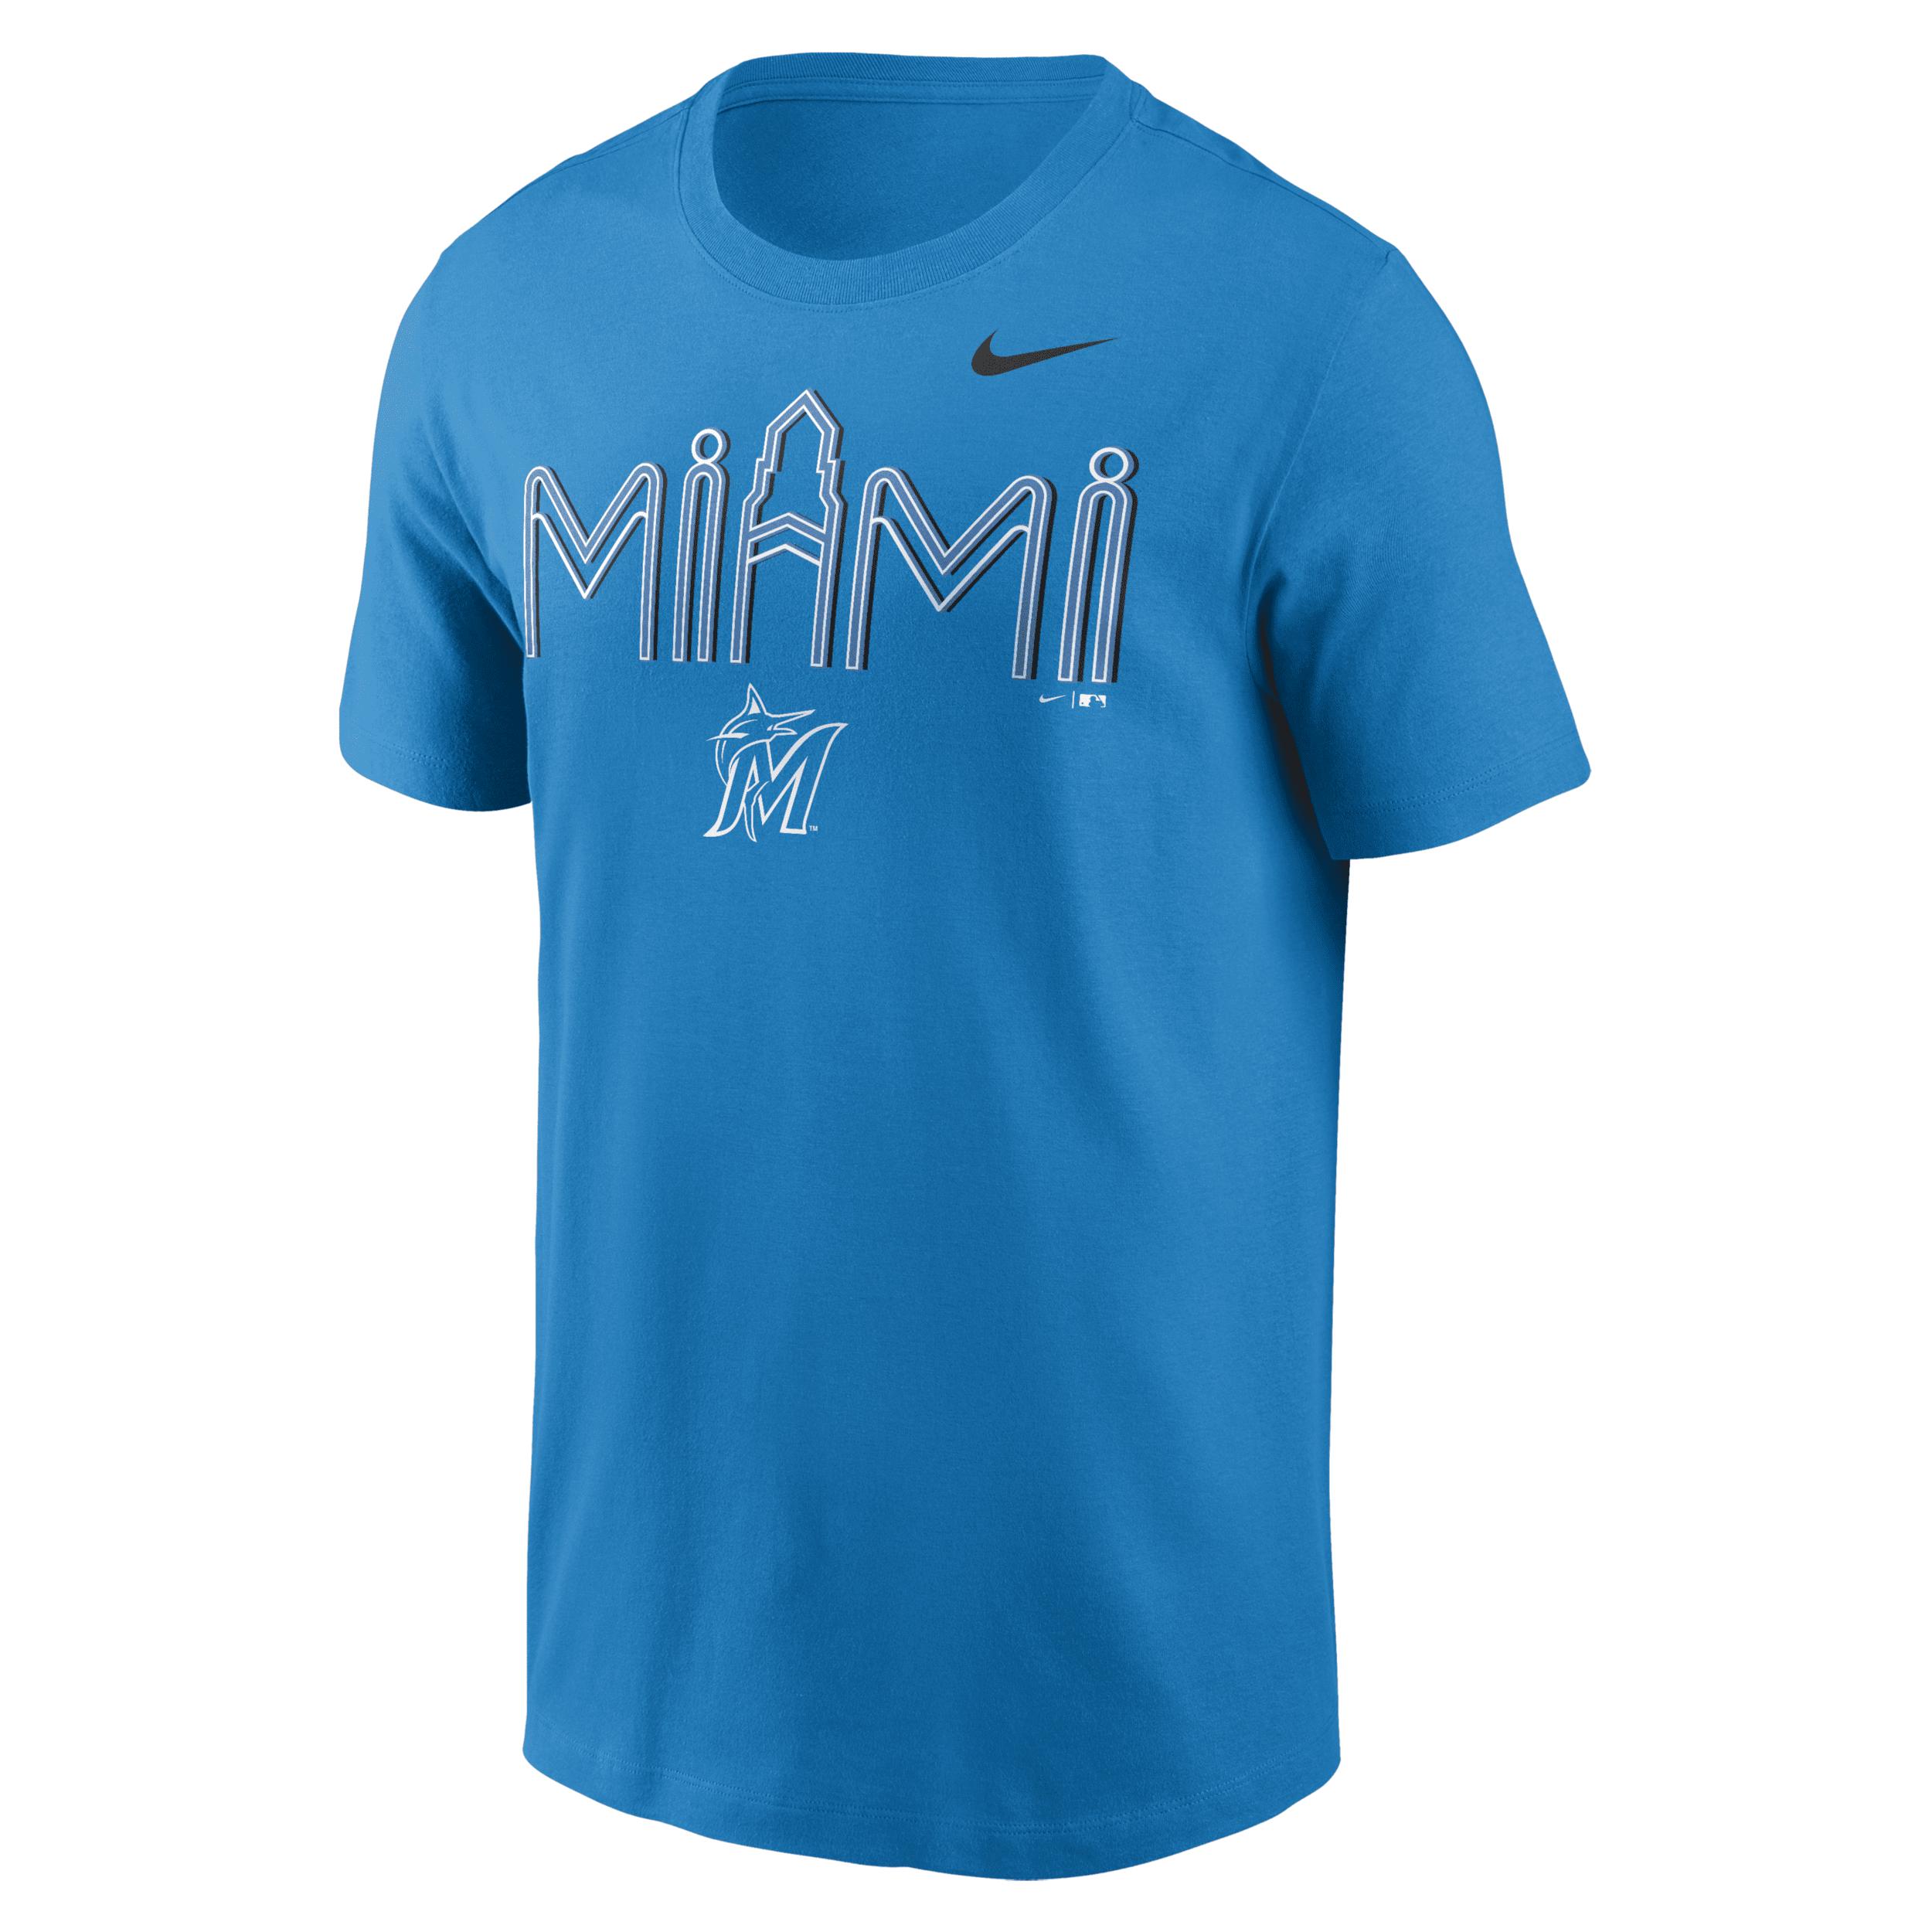 Nike Dri-FIT Velocity Practice (MLB Tampa Bay Rays) Men's T-Shirt.